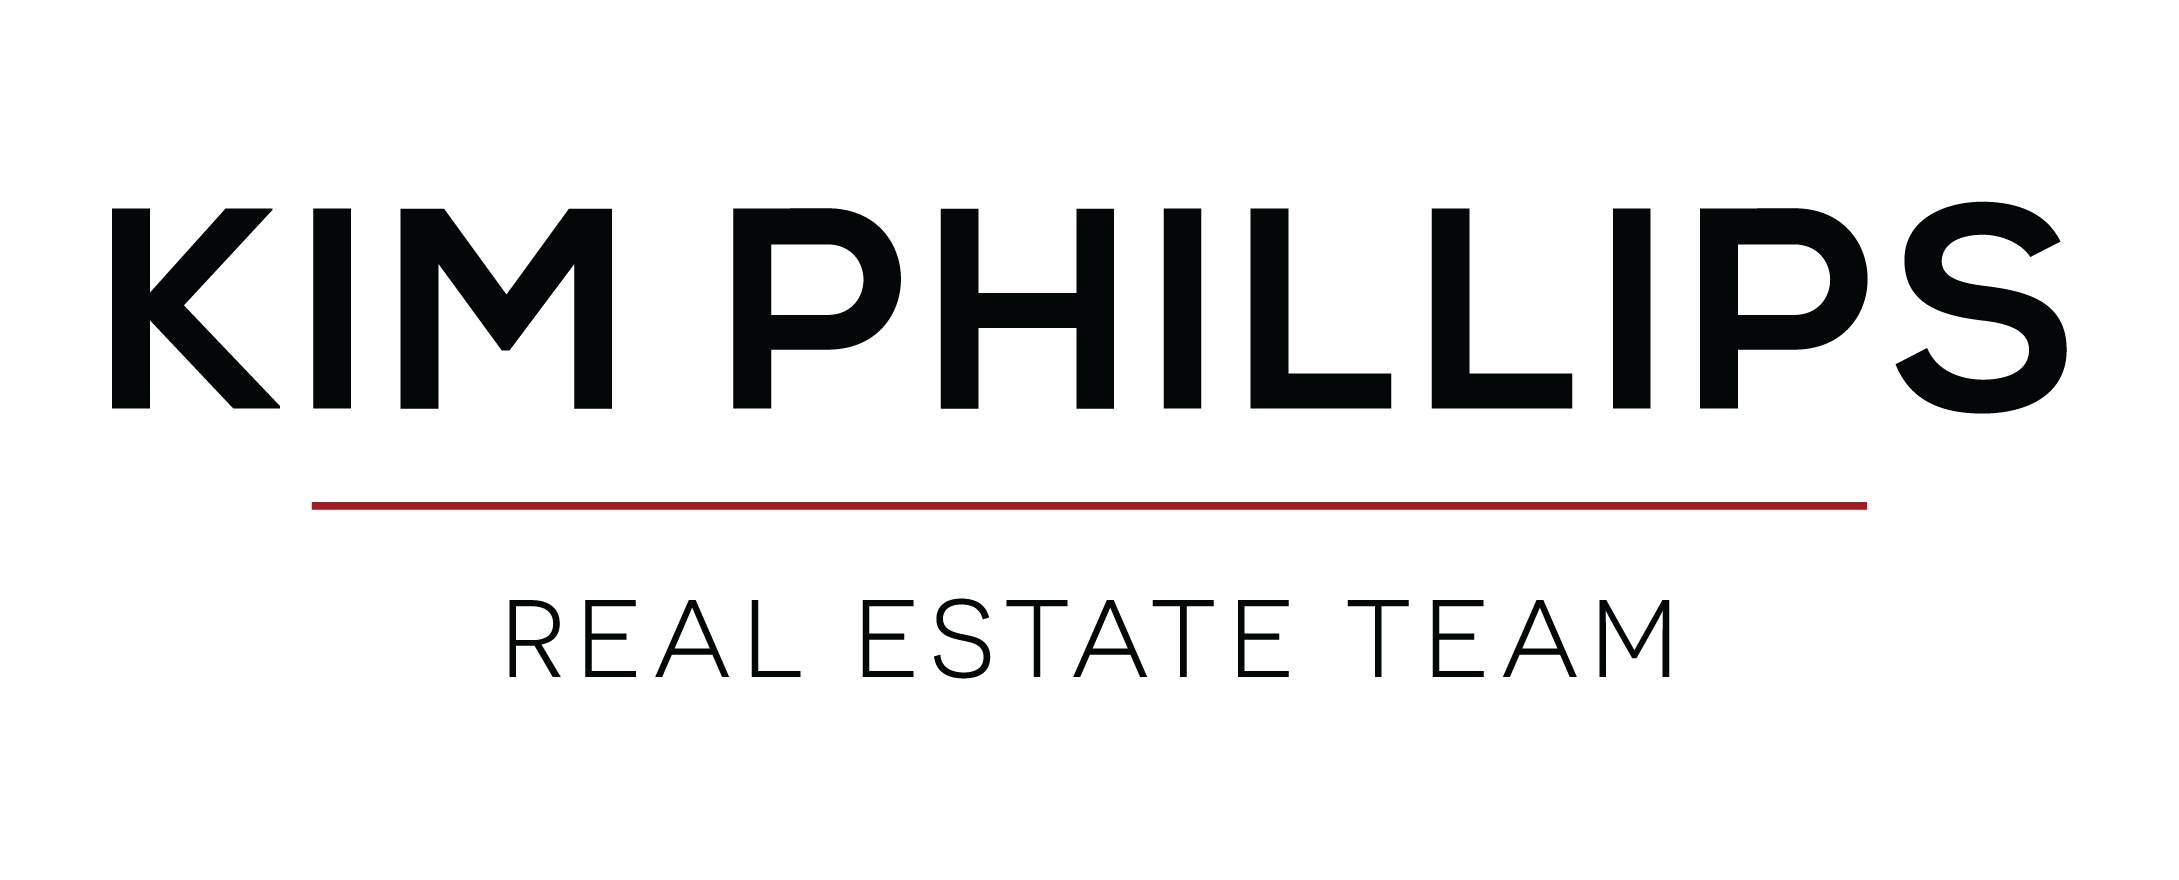 Kim Phillips Real Estate